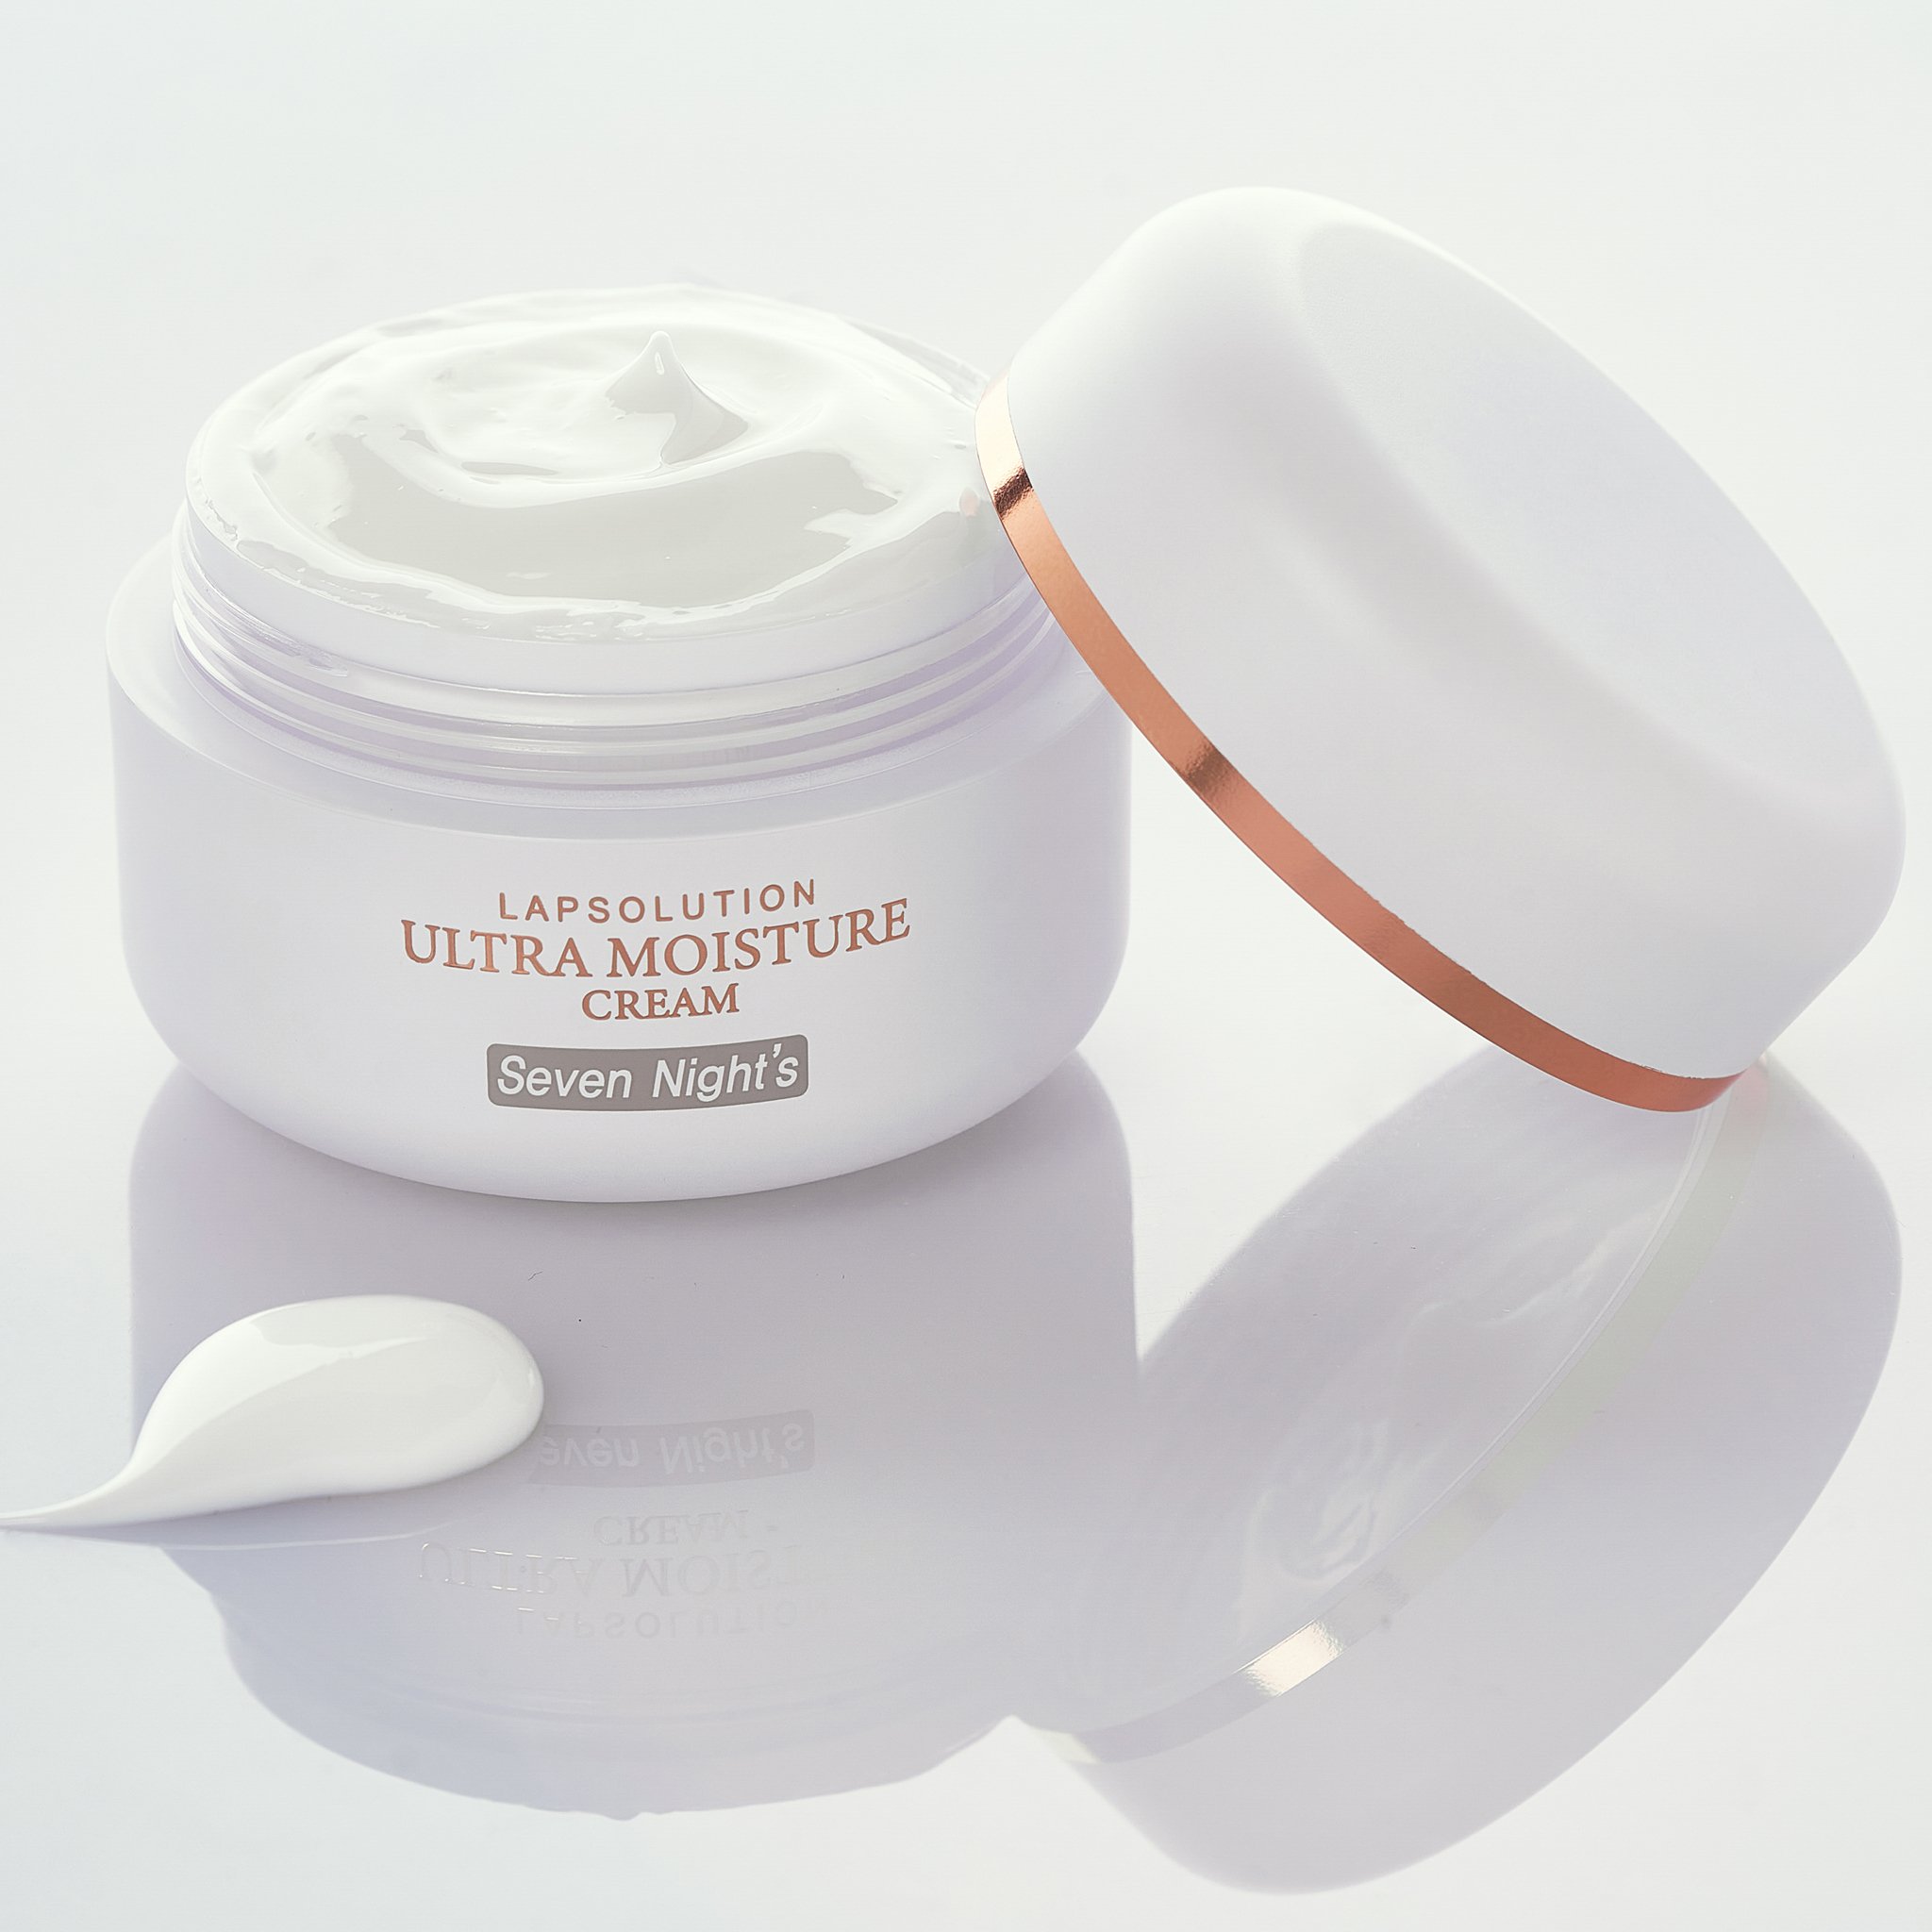 Kem dưỡng ẩm chống lão hóa Seven Night's Lap Solution Ultra Moisture Cream